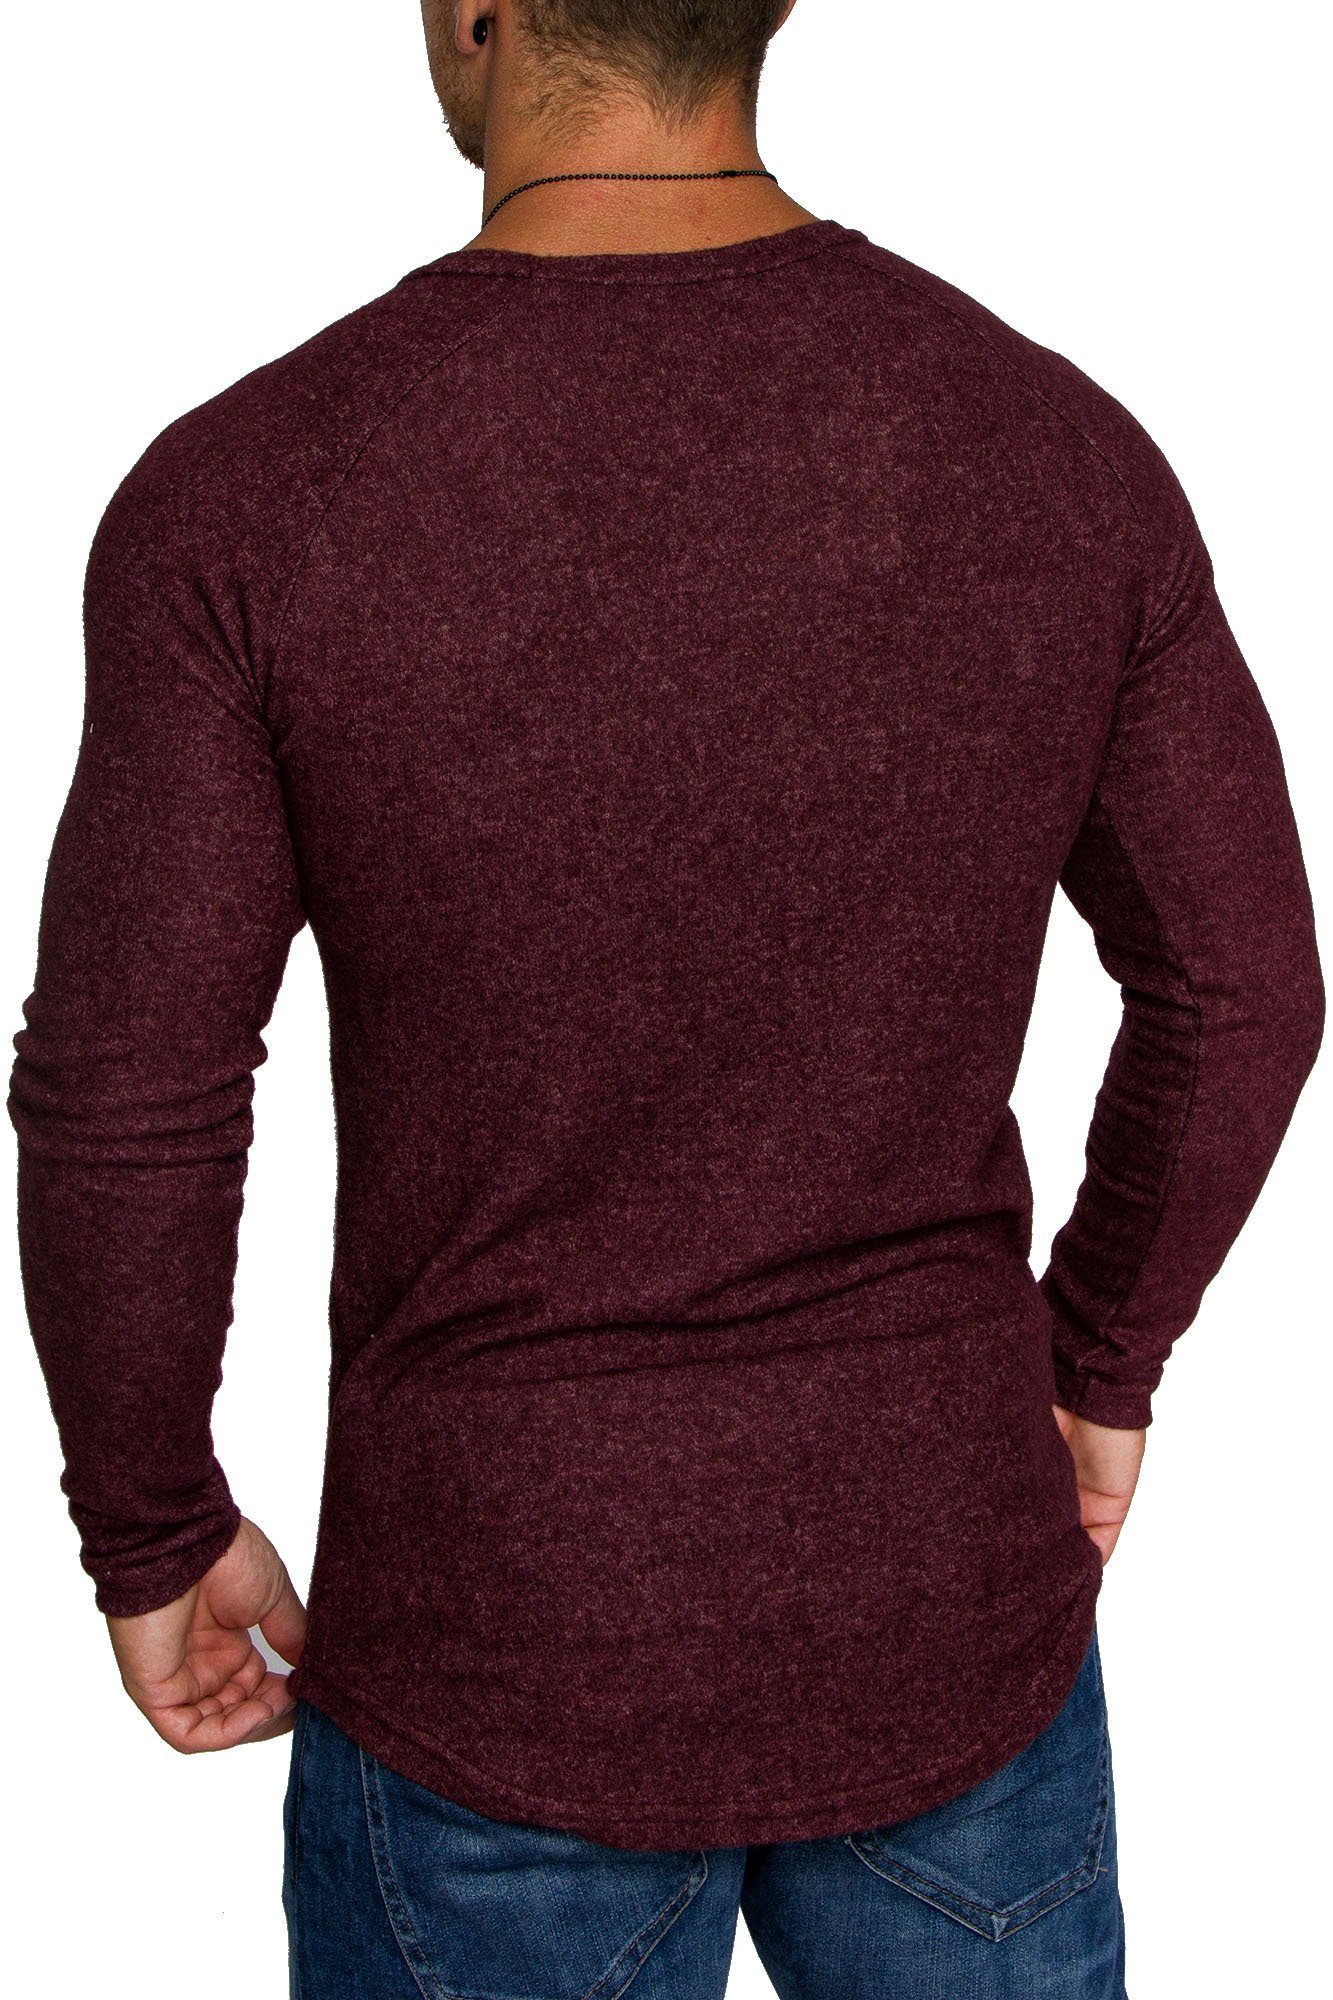 Amaci&Sons Sweatshirt TYLER Rundhals Oversize Bordeaux Herren Melange Pullover Hoodie Feinstrick Pullover mit Basic